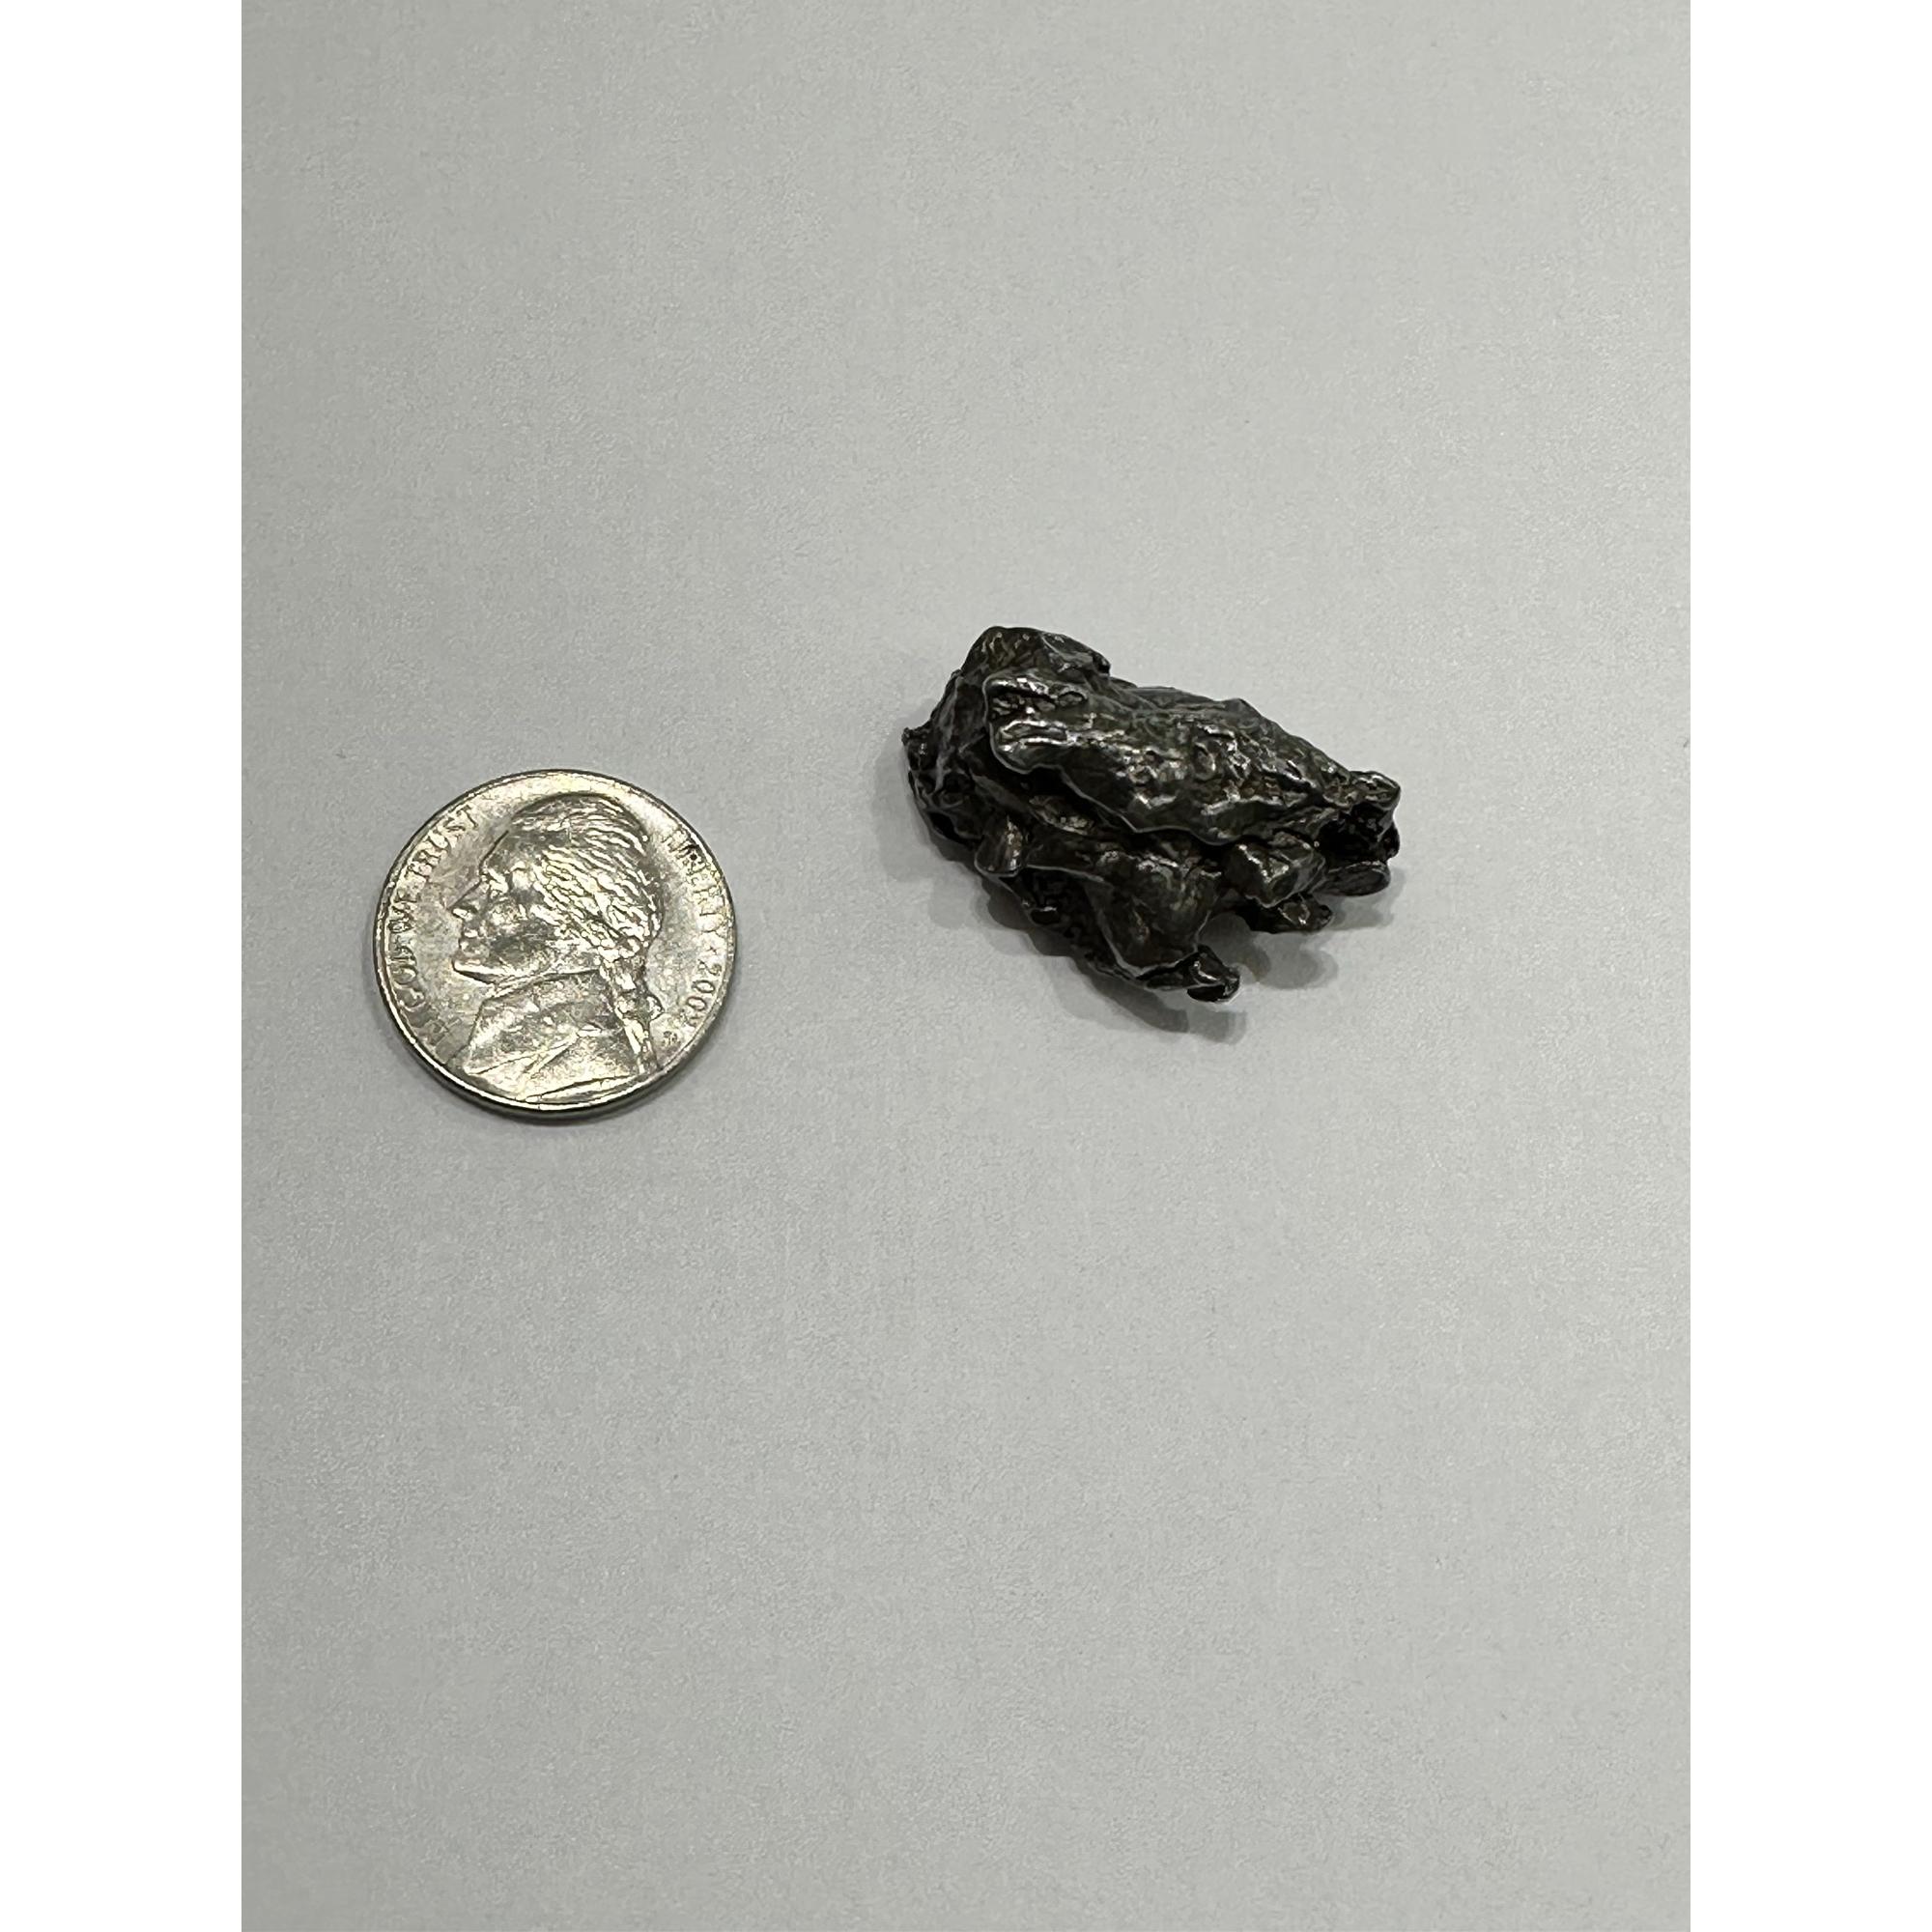 Campo de Cielo meteorite, Nickel iron 1 1/2 inch Prehistoric Online